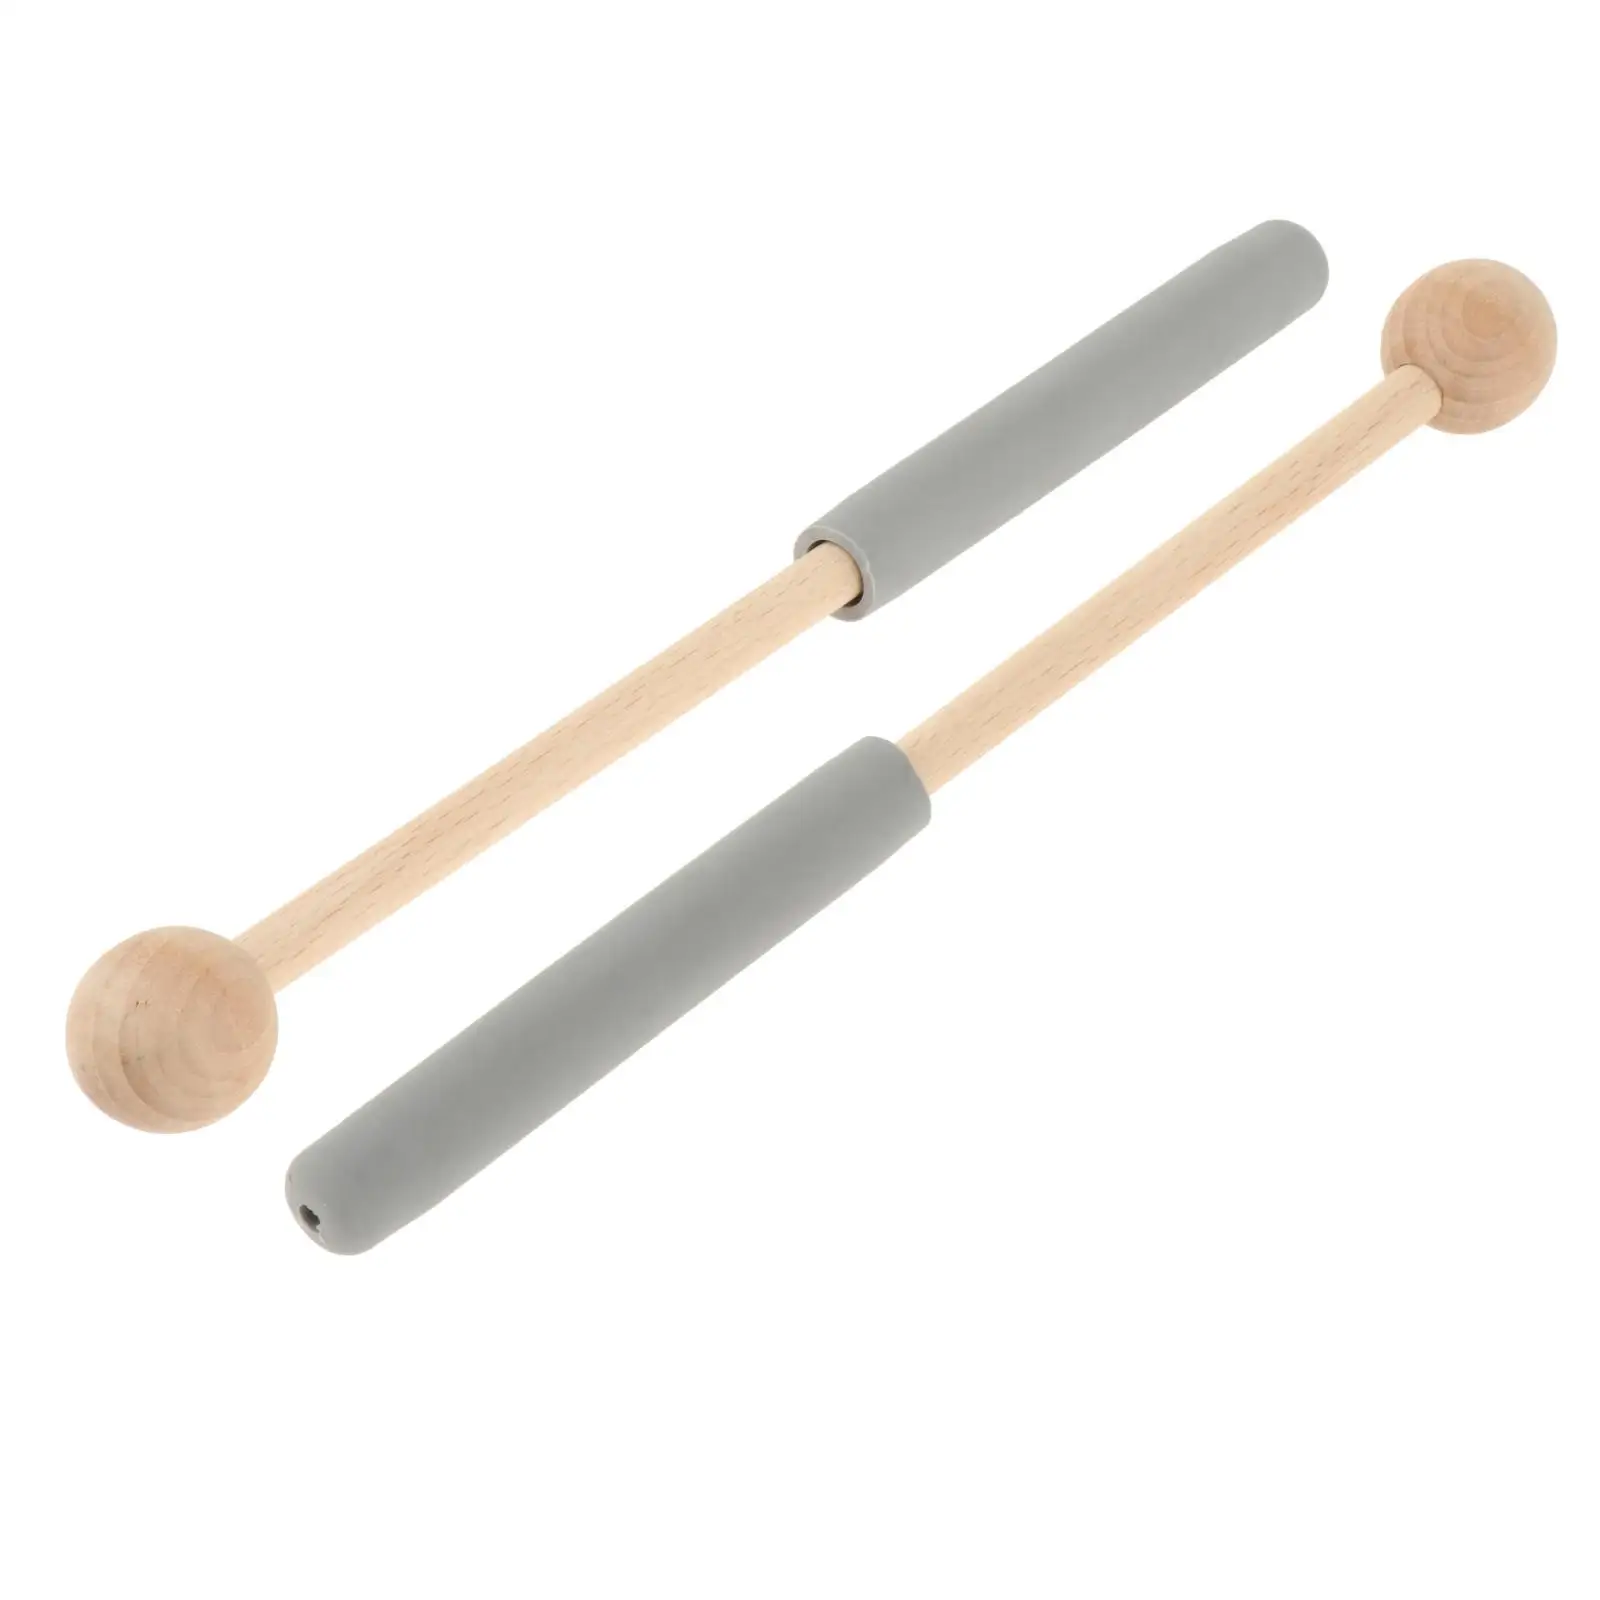 Marimba Hammer Durable Keyboard 1 Pair Instrument Accessory Toddler Hand Drum Drumsticks Lotus Drum